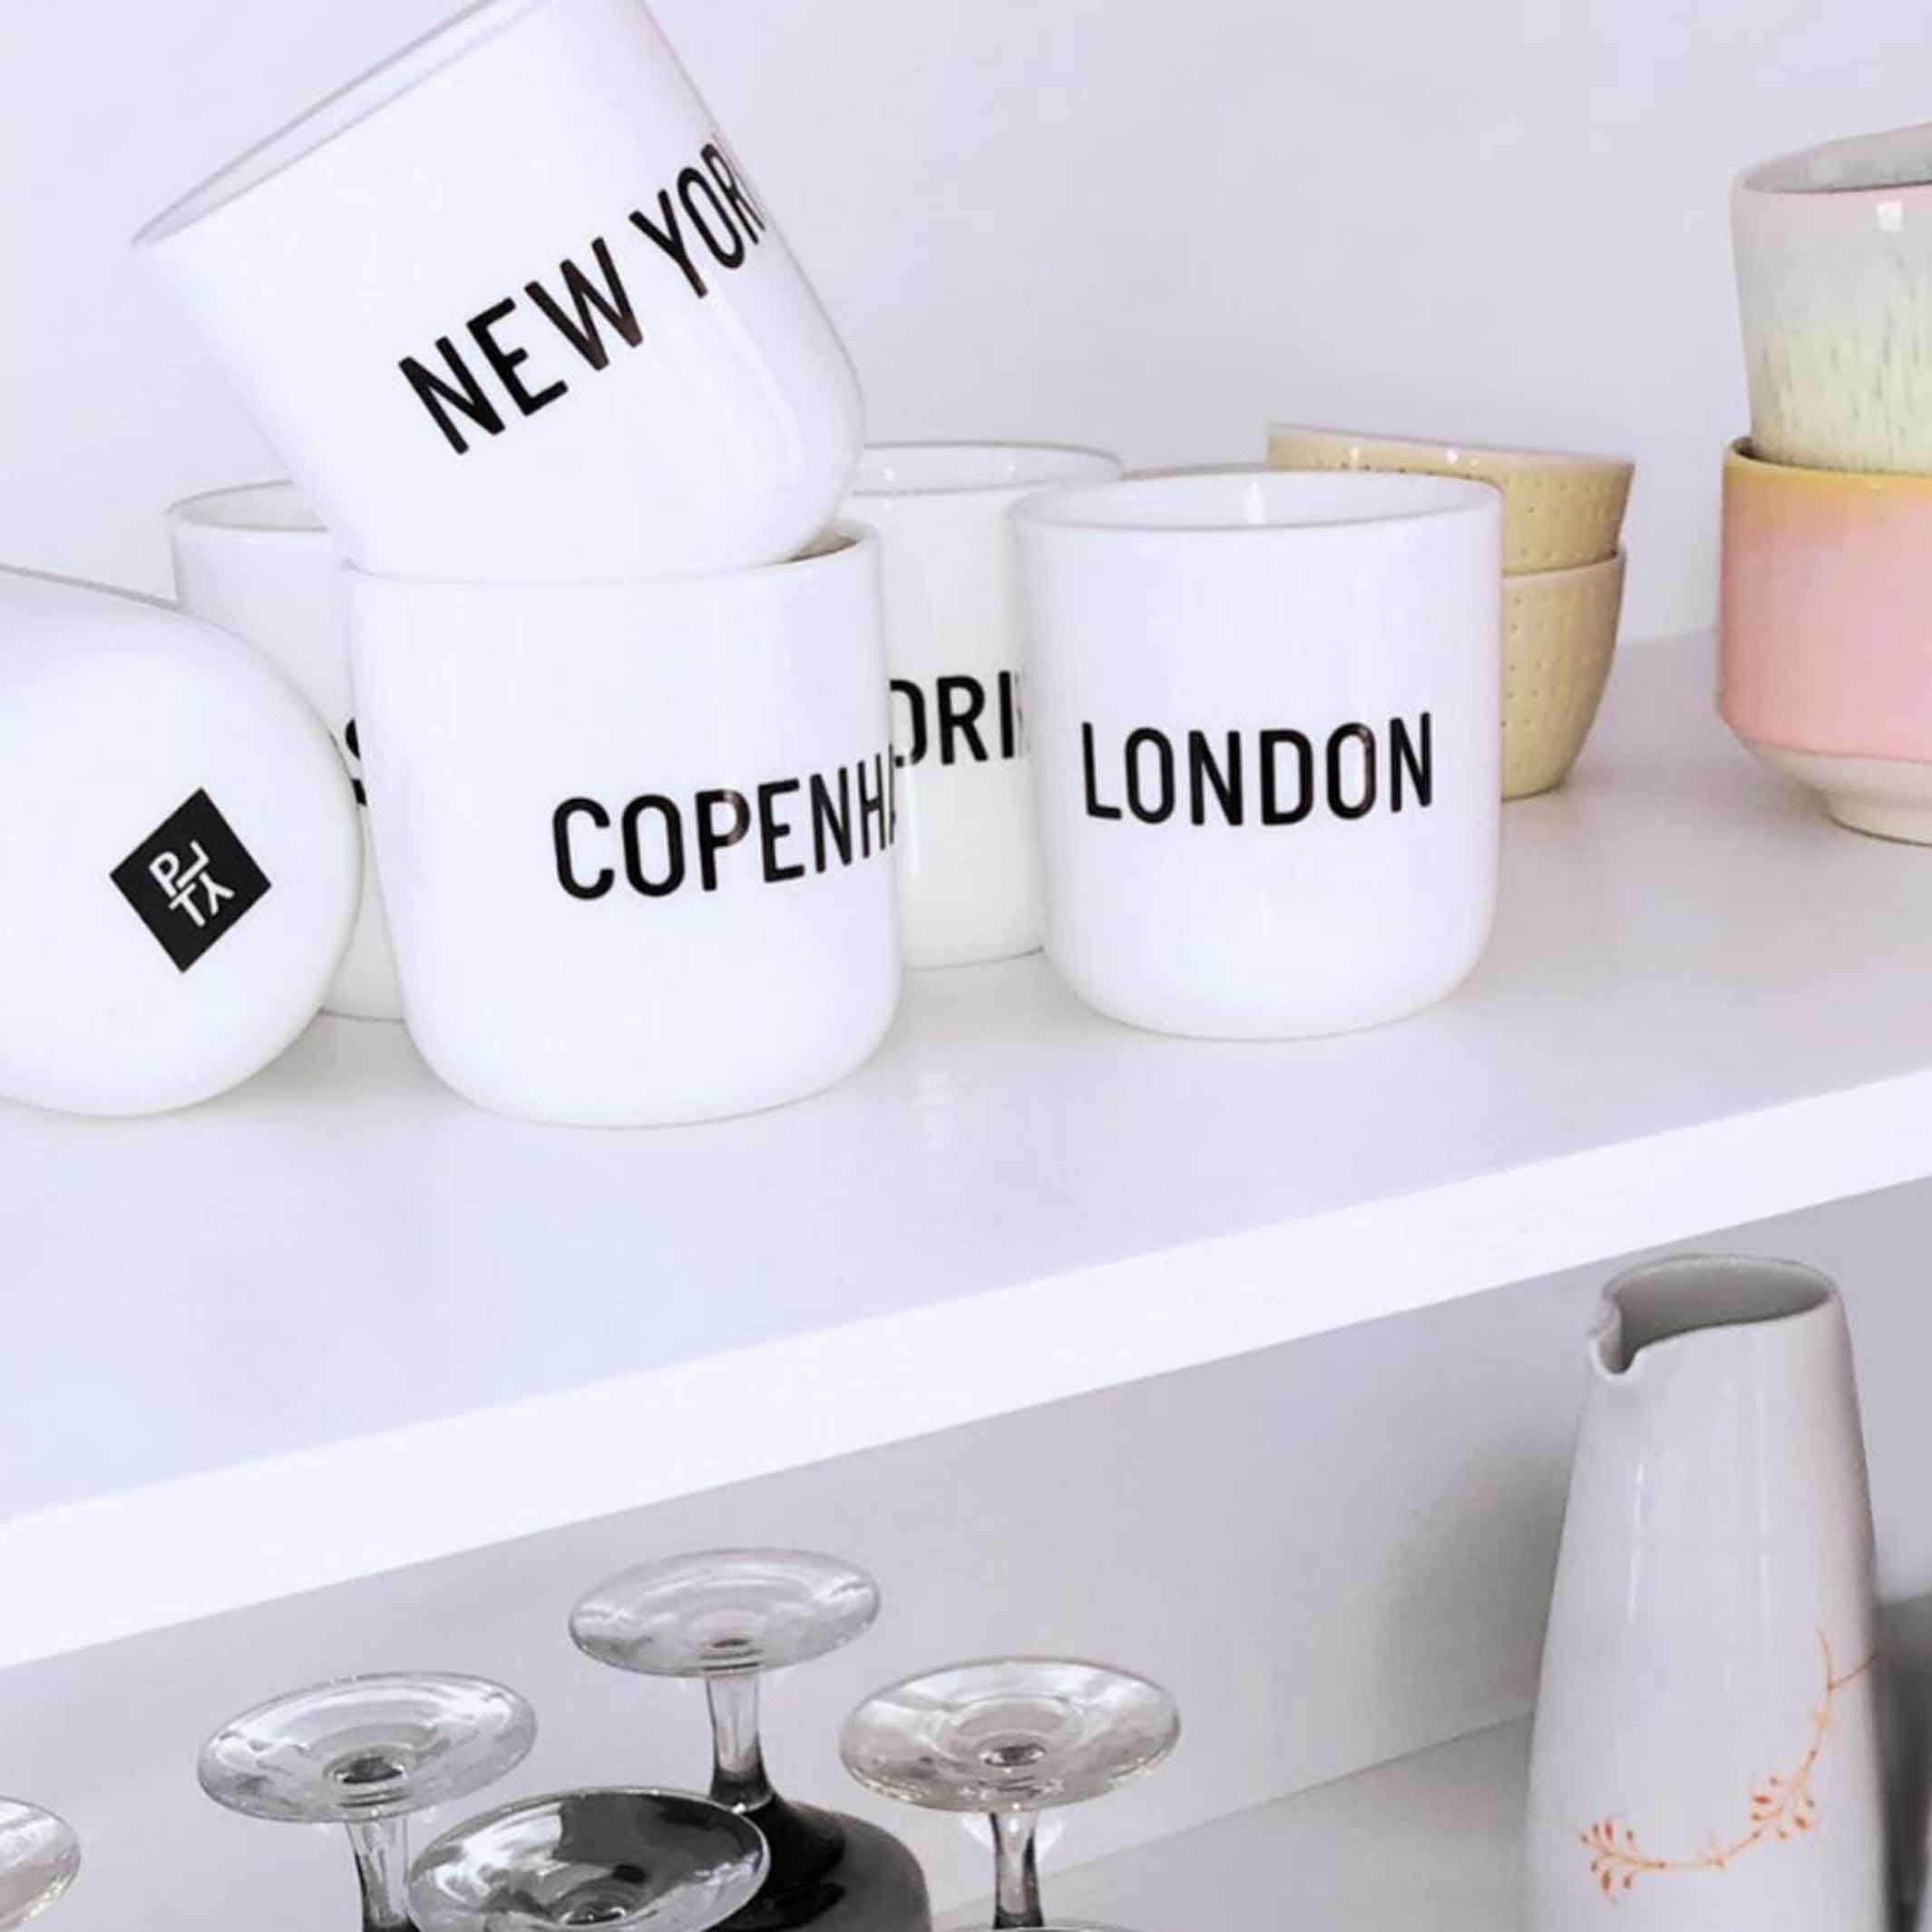 HAMBURG | white coffee & tea MUG with black typo | City Collection | PLTY